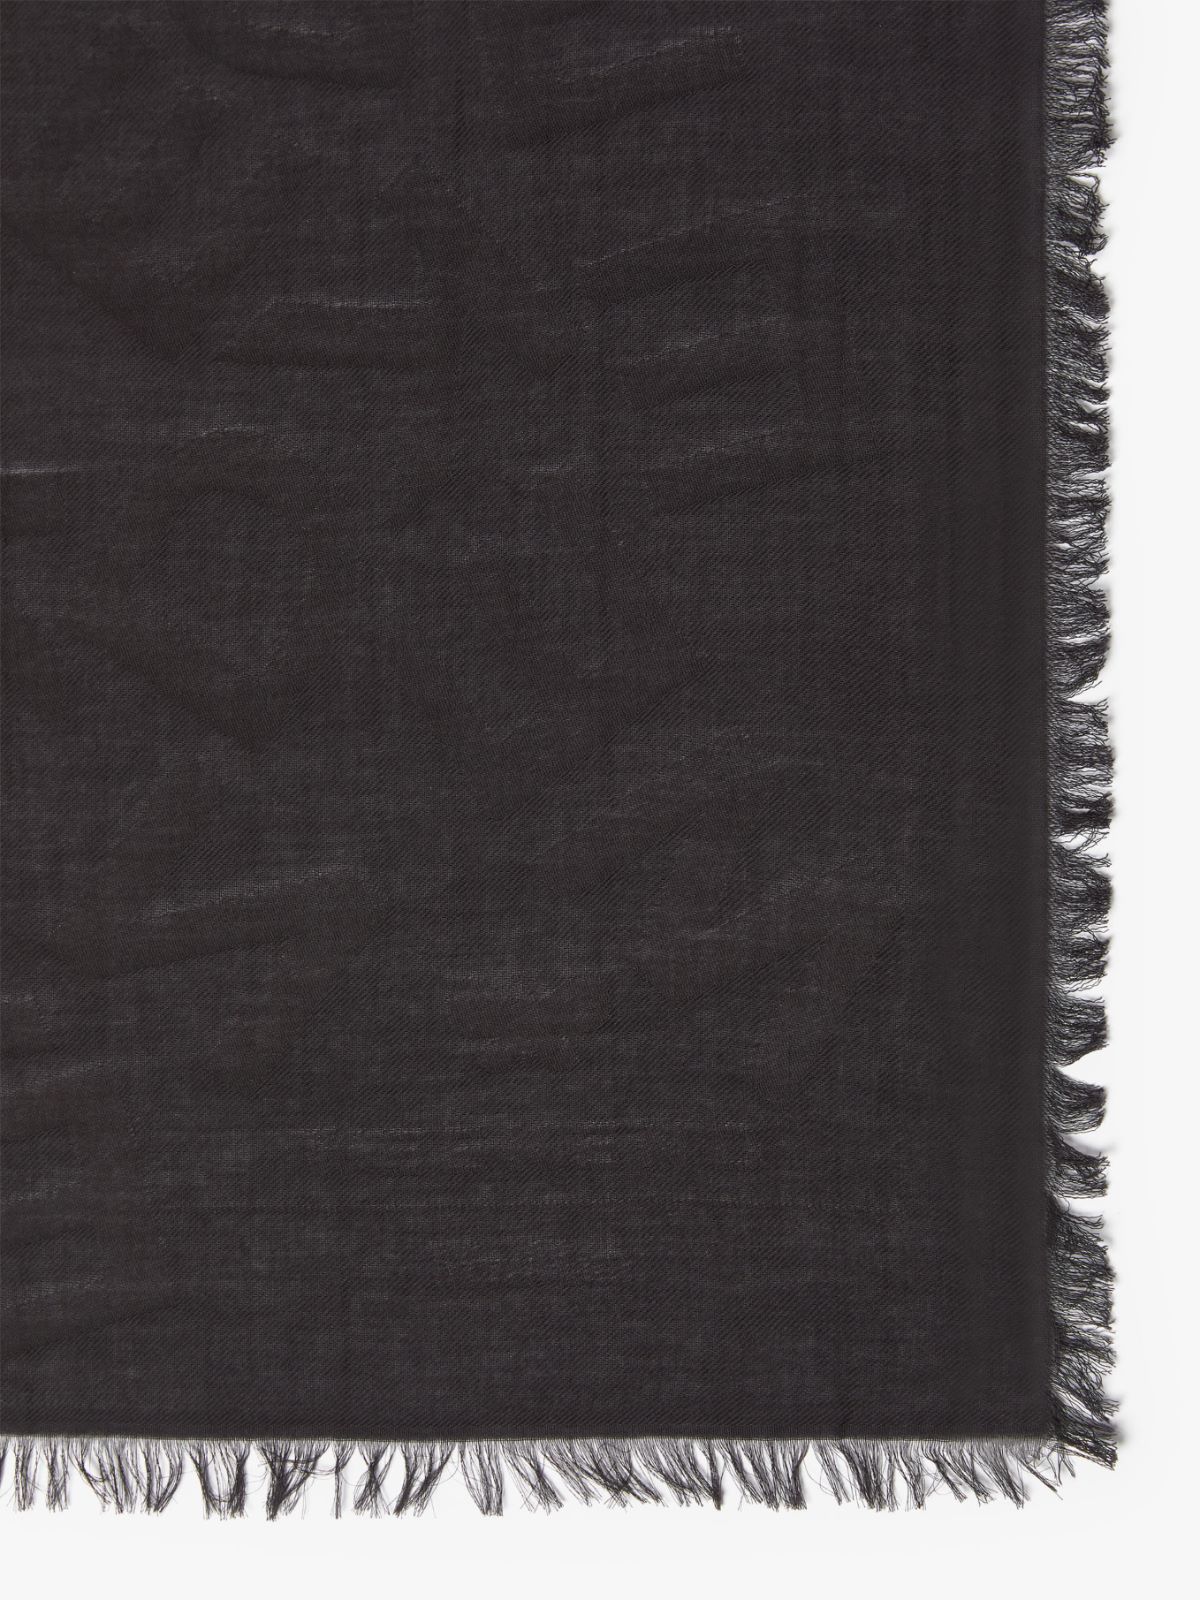 Jacquard cotton stole, black | Weekend Max Mara